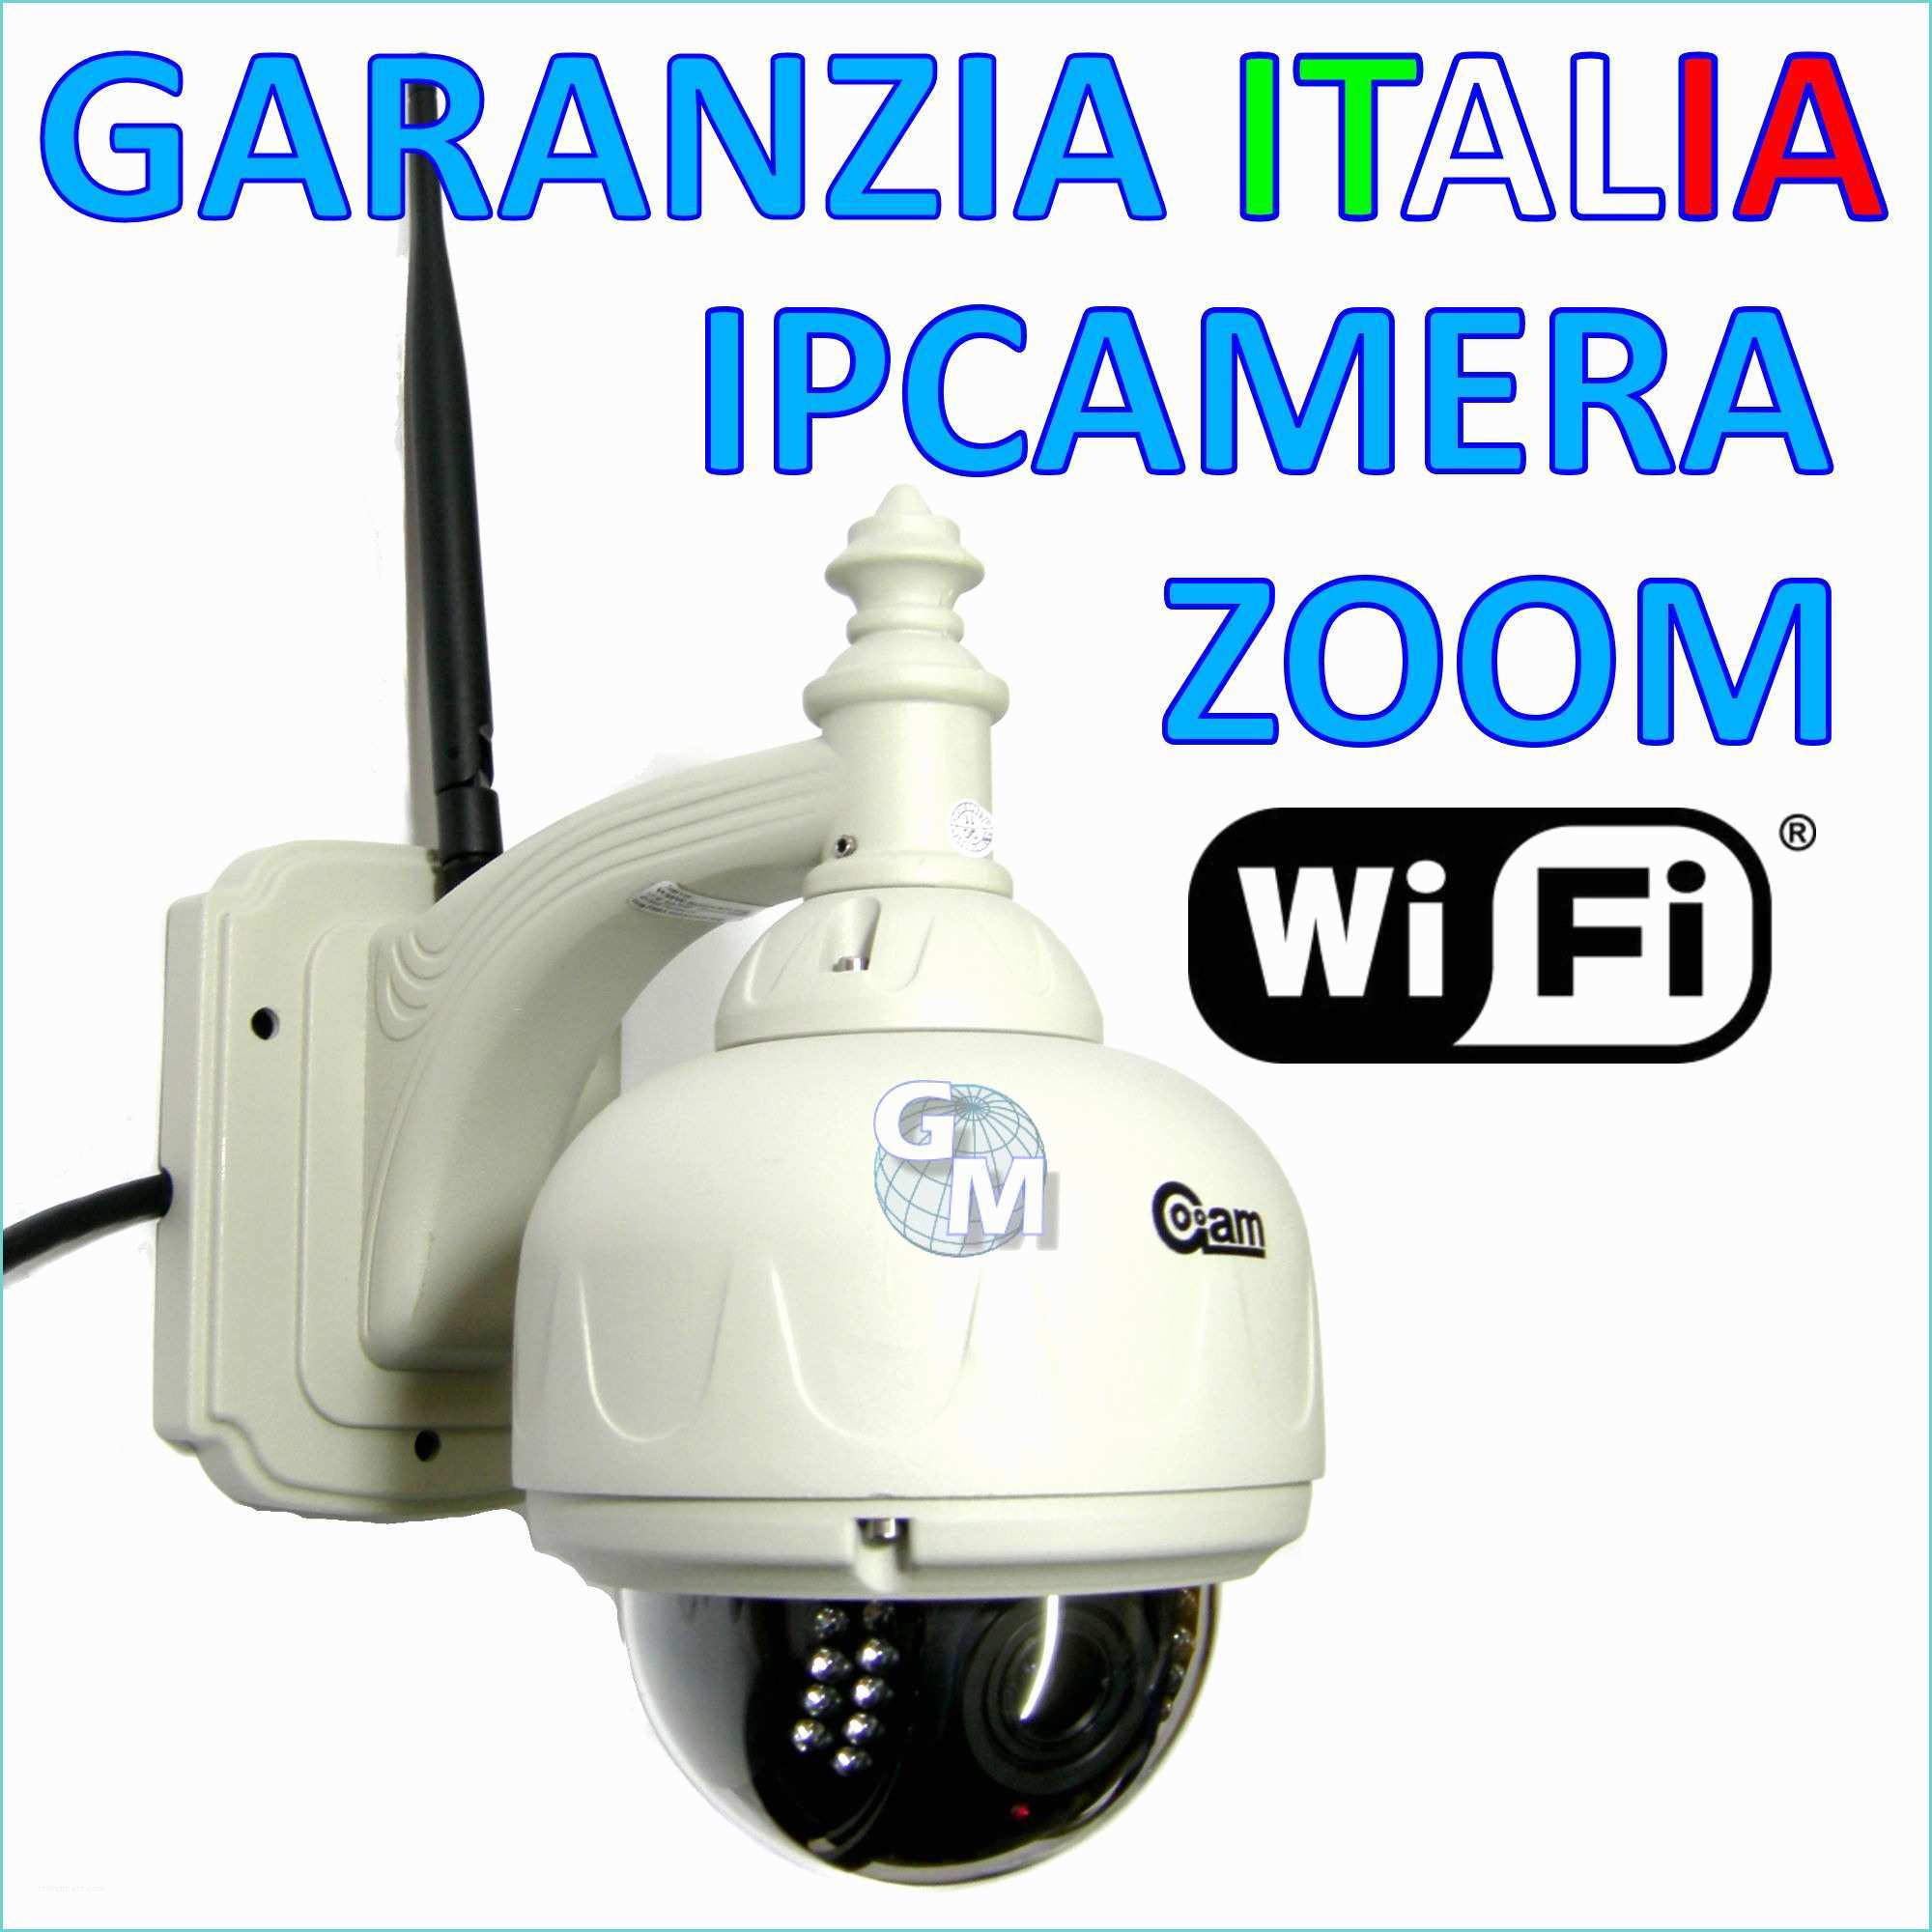 Telecamere Wifi Da Esterno Casa Moderna Roma Italy Telecamera Wireless Da Esterno